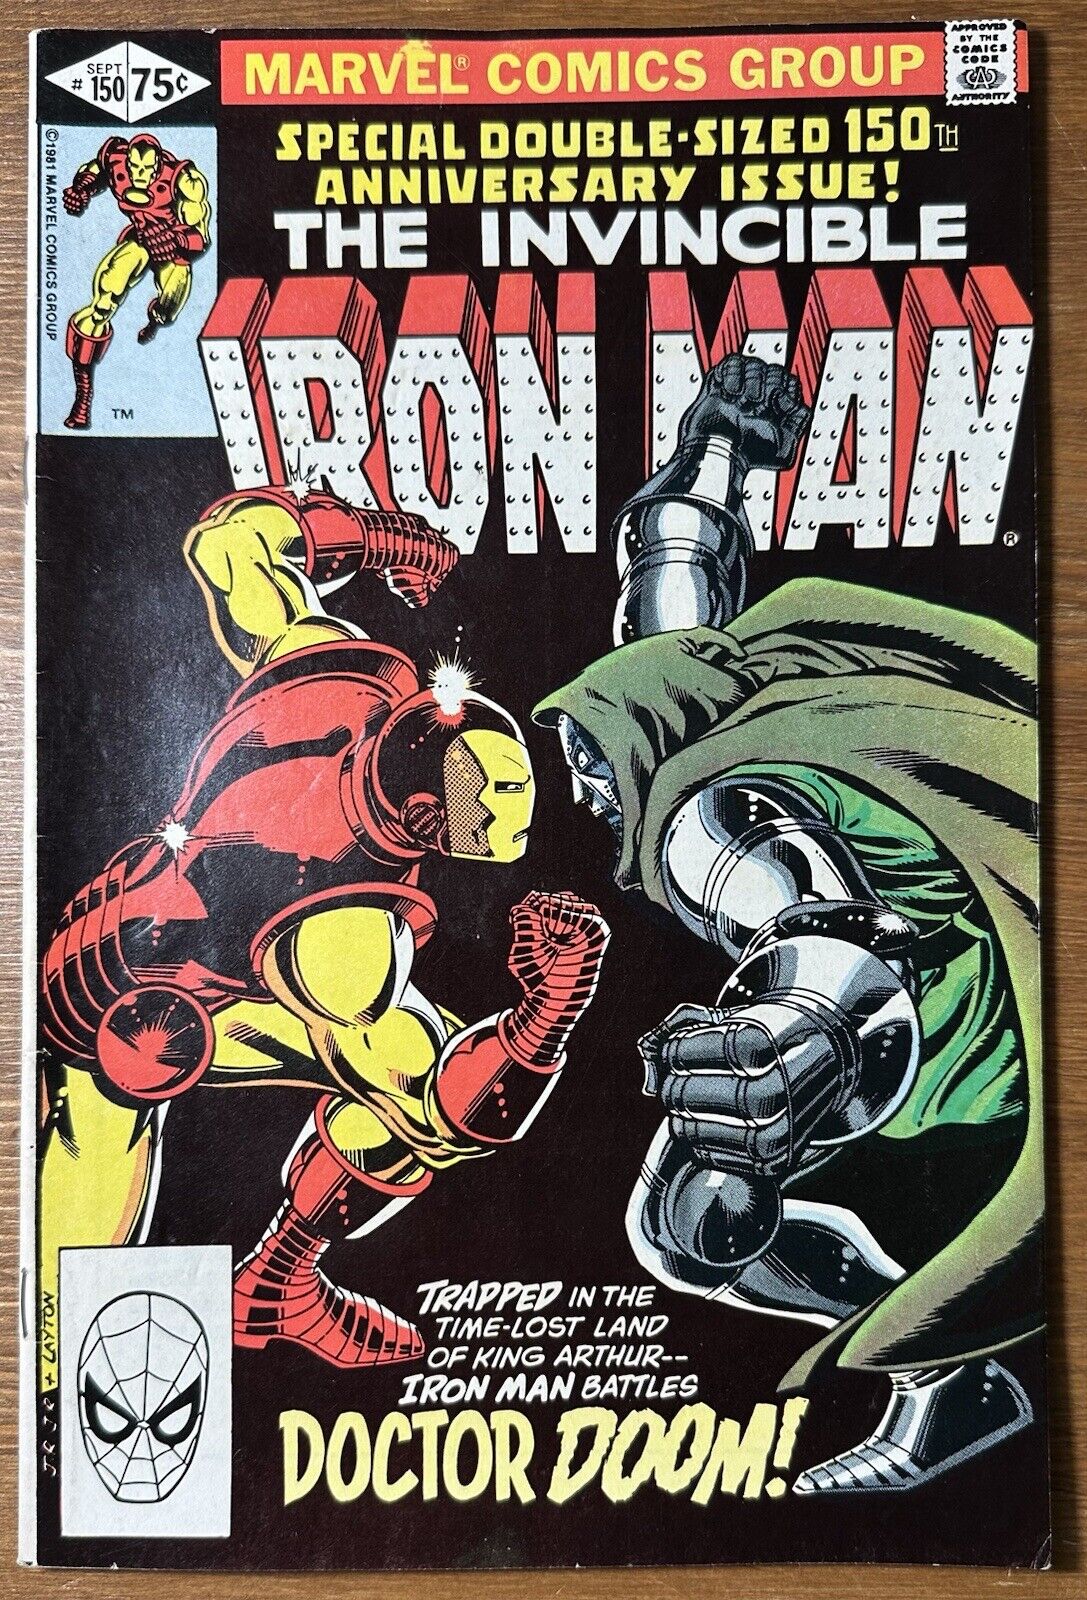 1981 MARVEL Comics IRON MAN #150 Iconic IRON MAN vs. Dr. DOOM Romita Cover